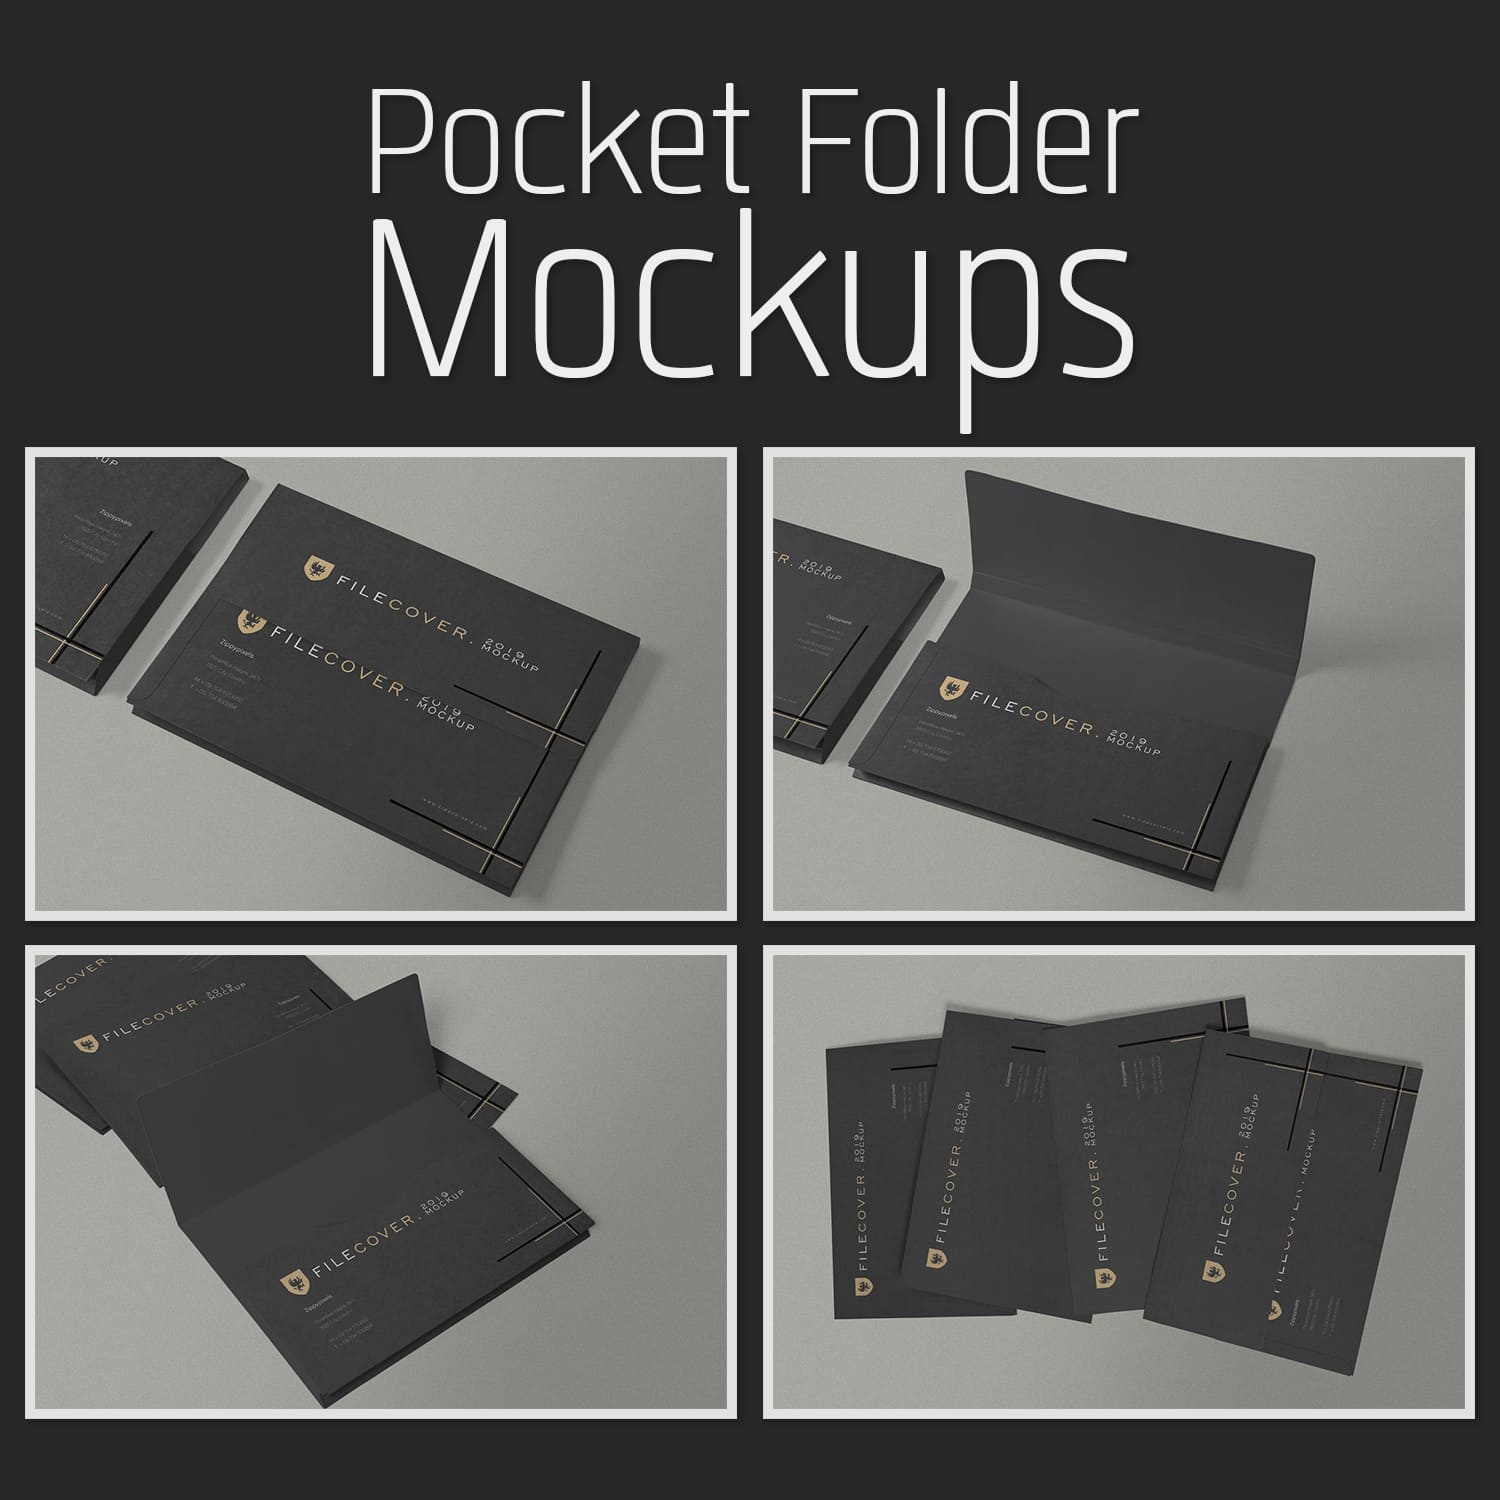 Pocket Folder images collection with lovely design.